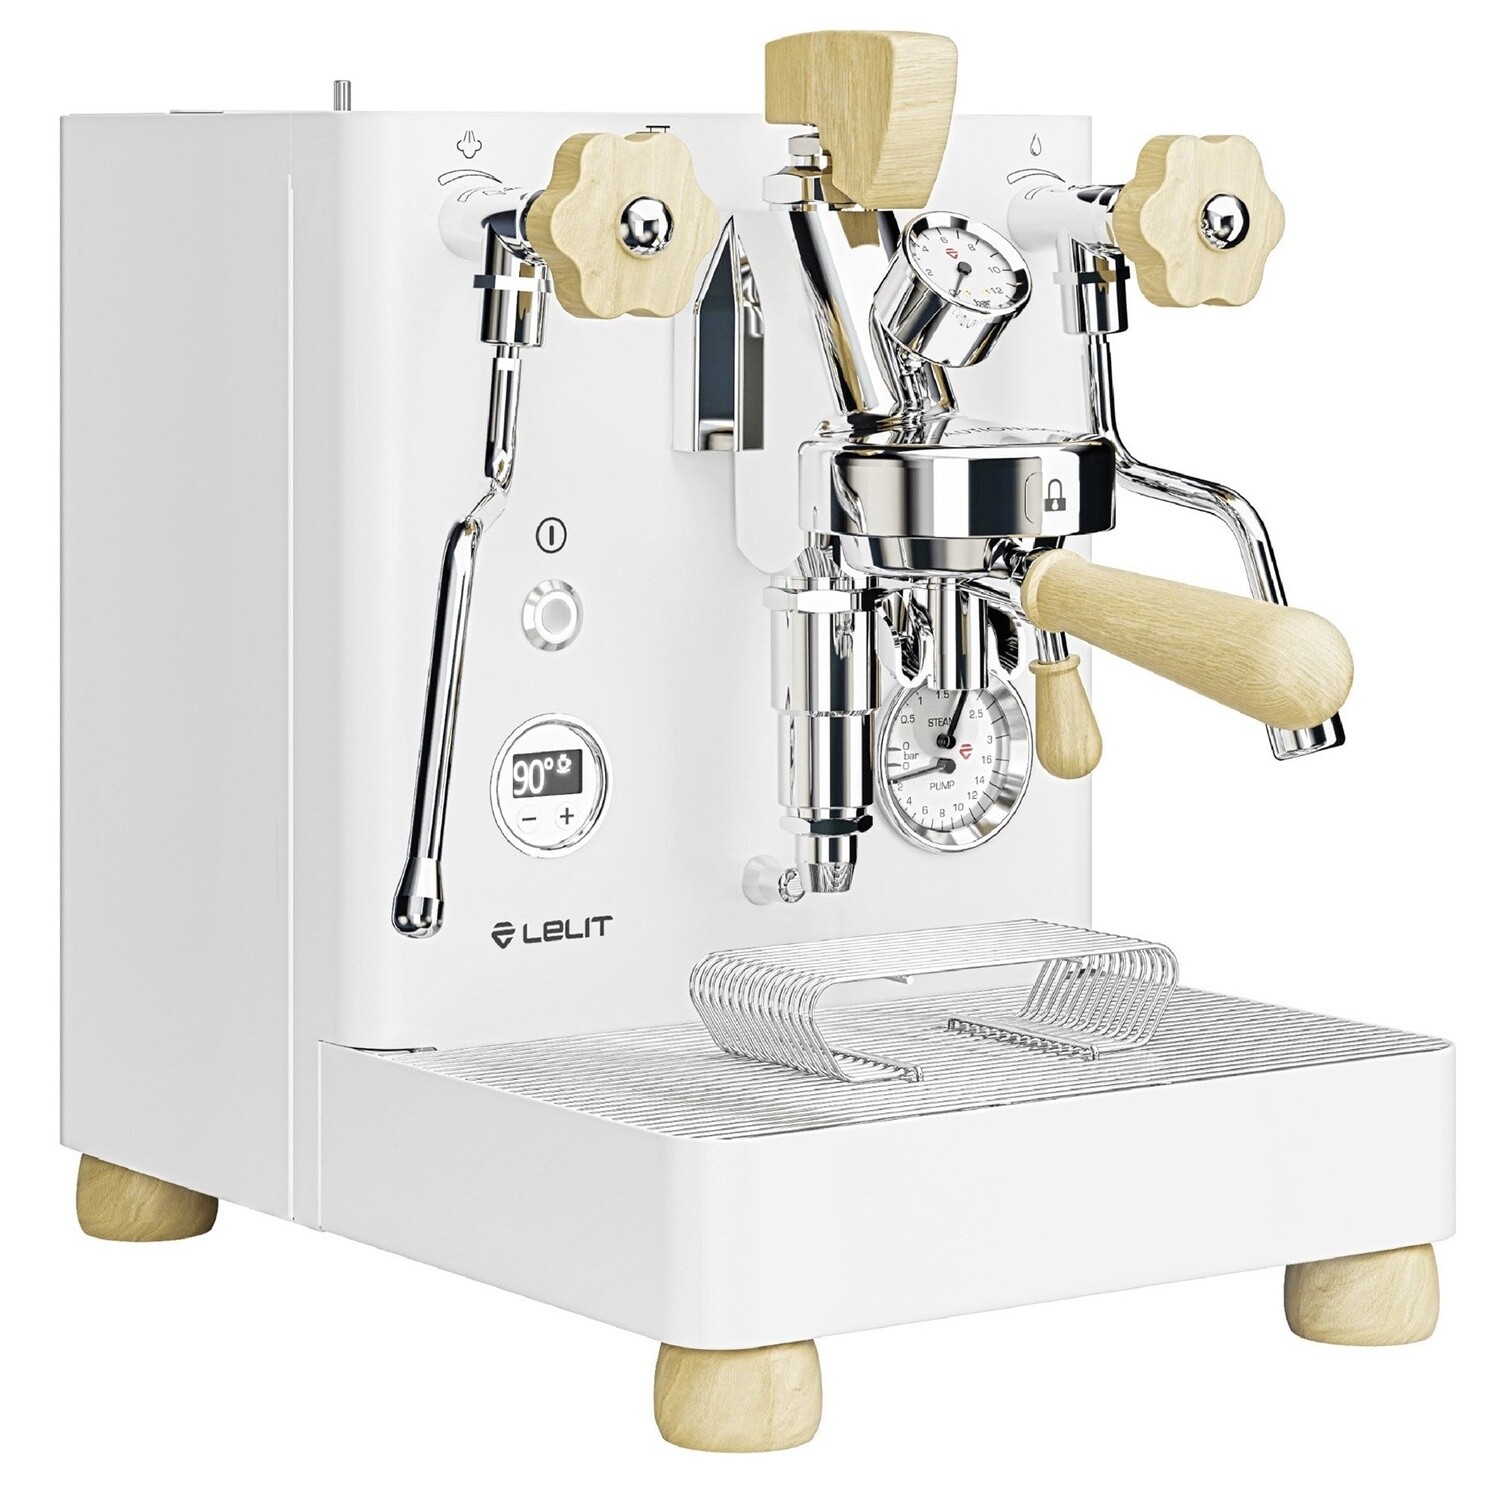 Lelit Bianca PL162TCW White Espresso Machine - Open Box